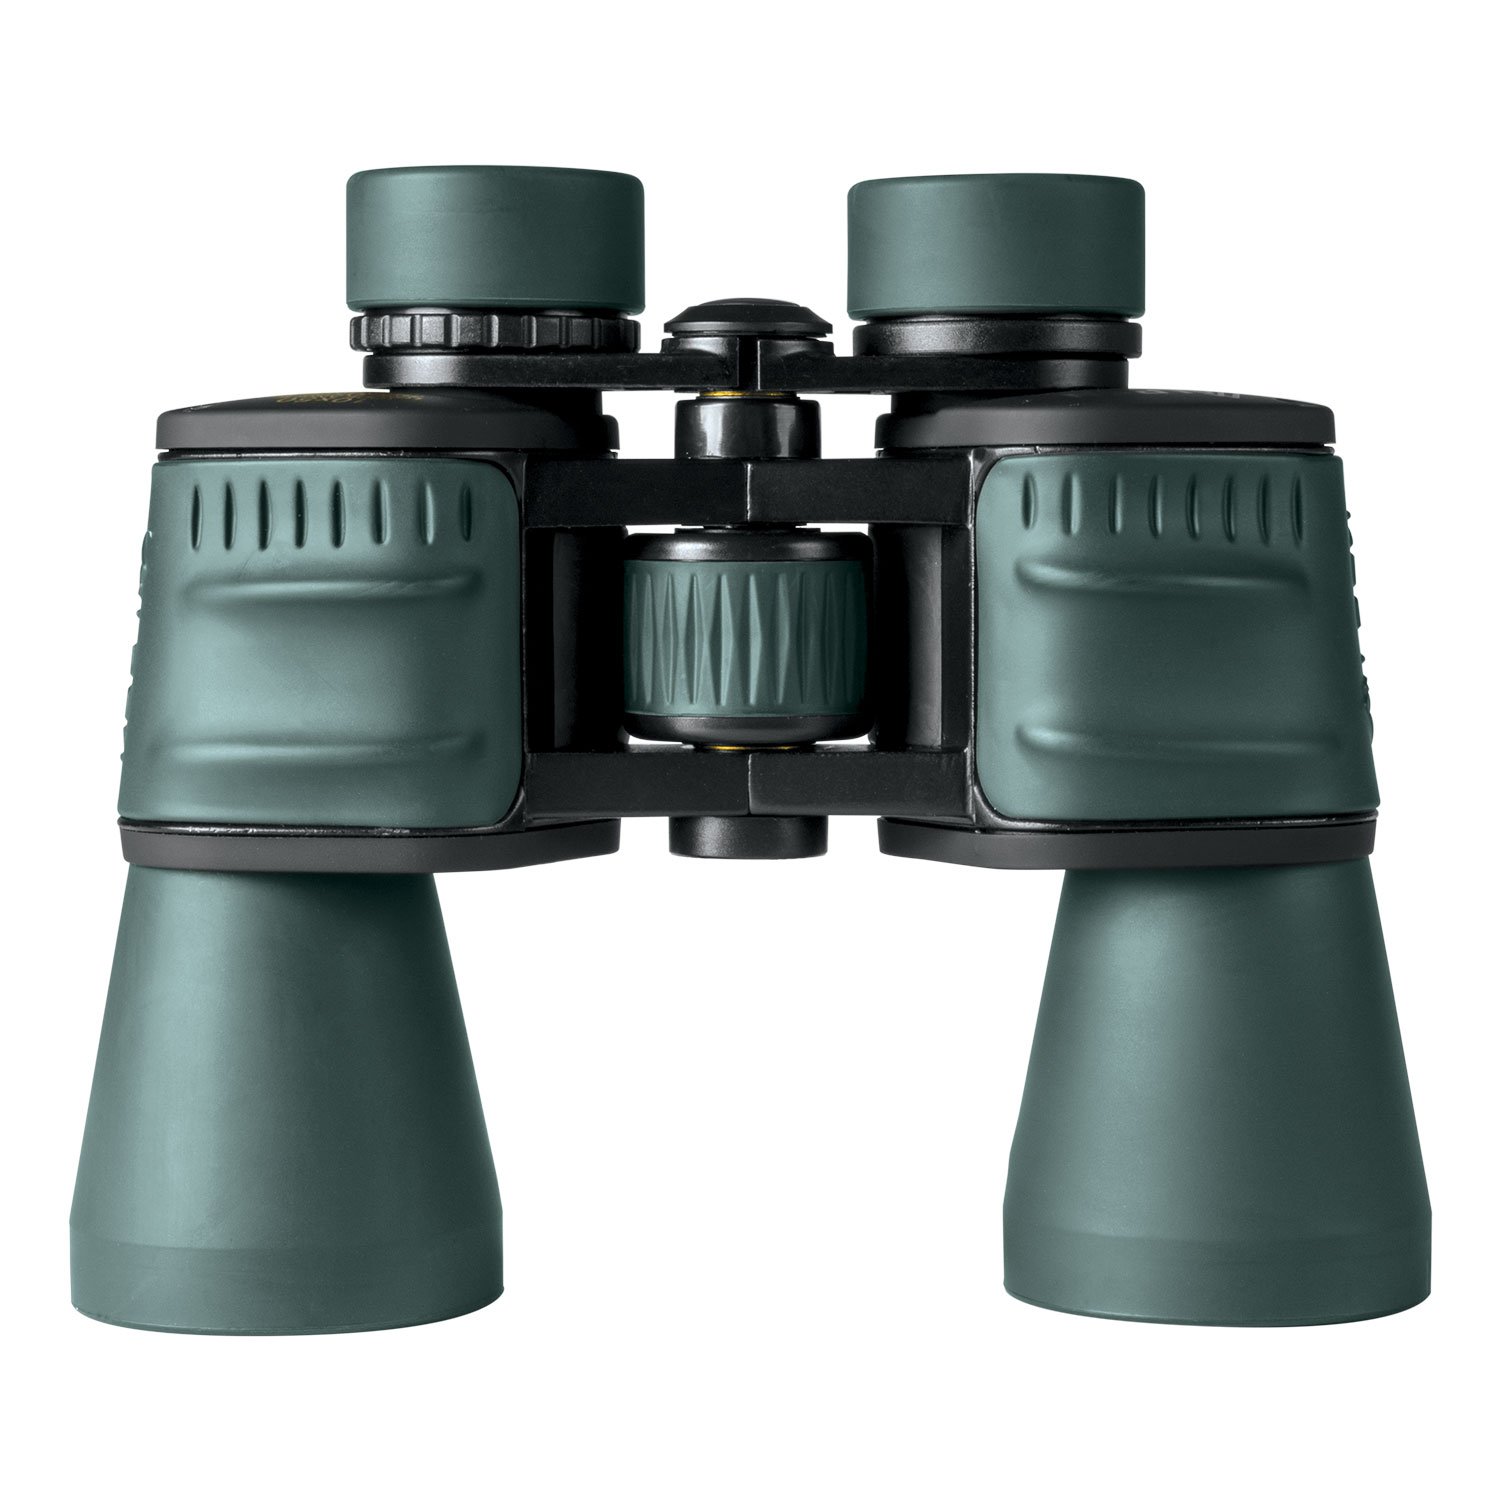 10x50 Magnaview binocular